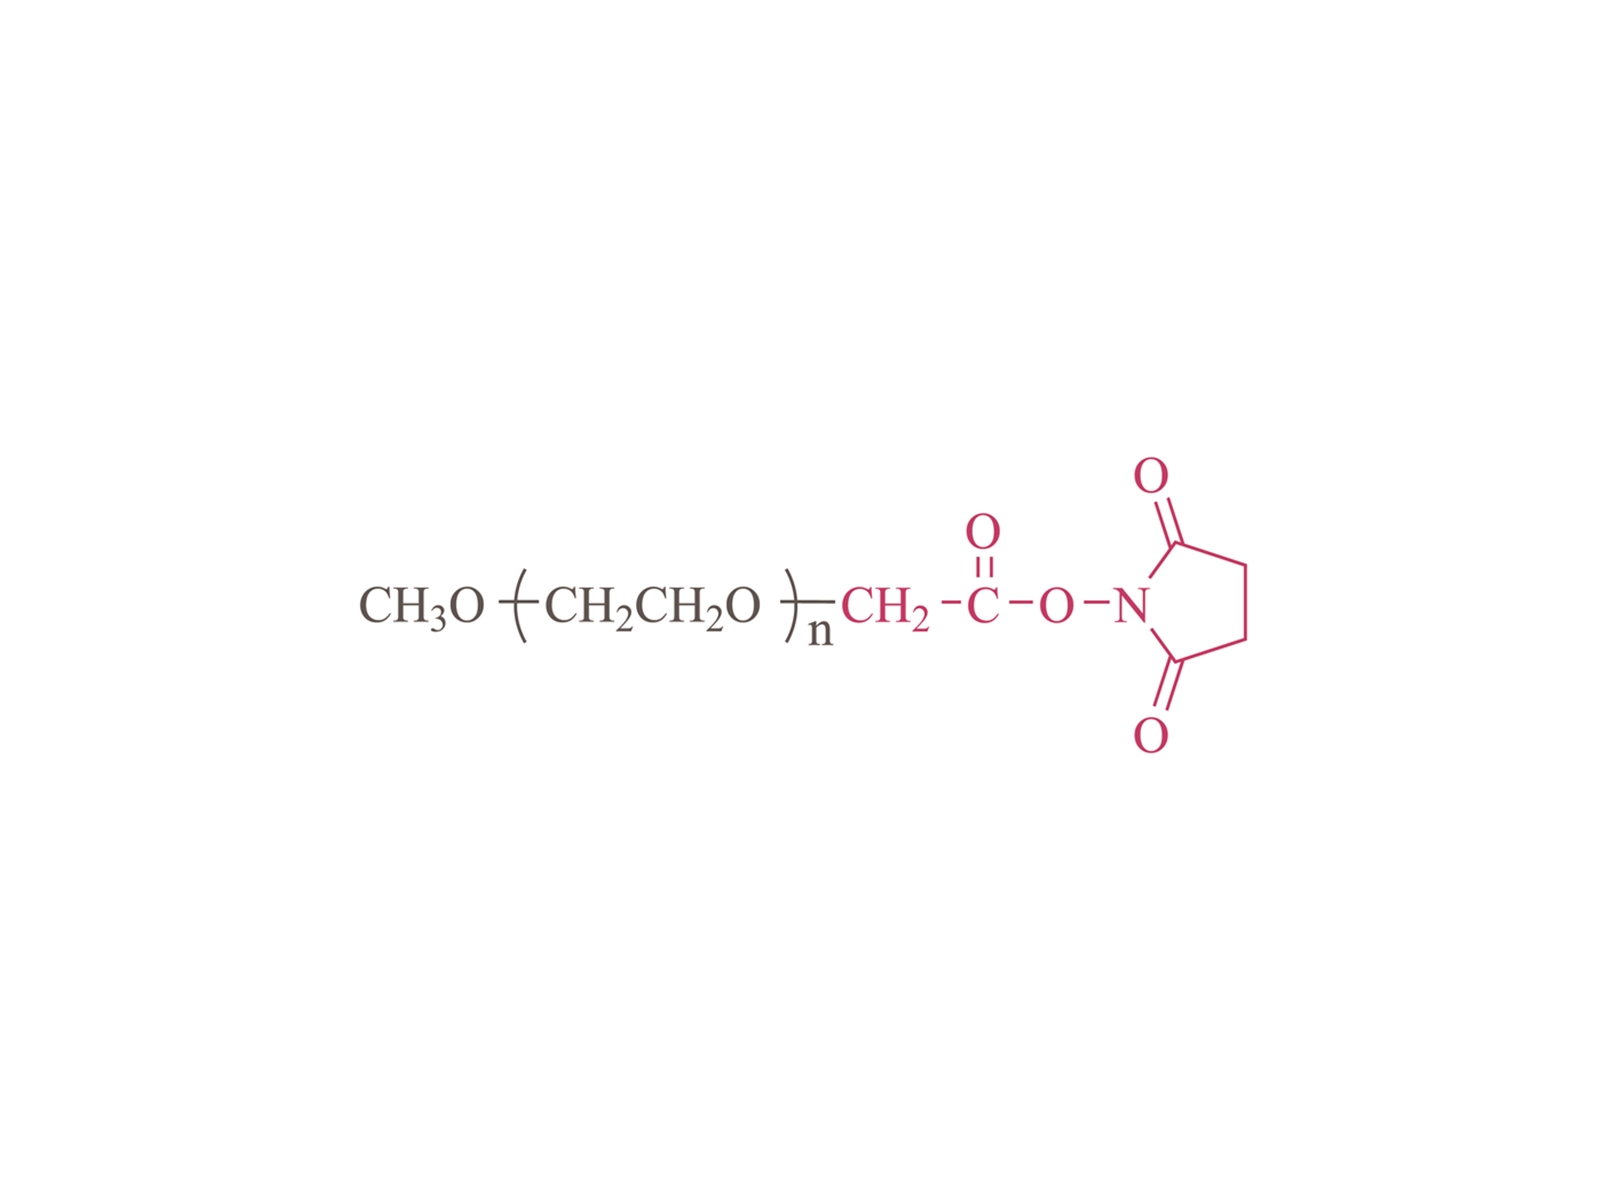 Metoksipoli (etilen glikol) süksinimidil karboksimetil ester [MPEG-SCM]